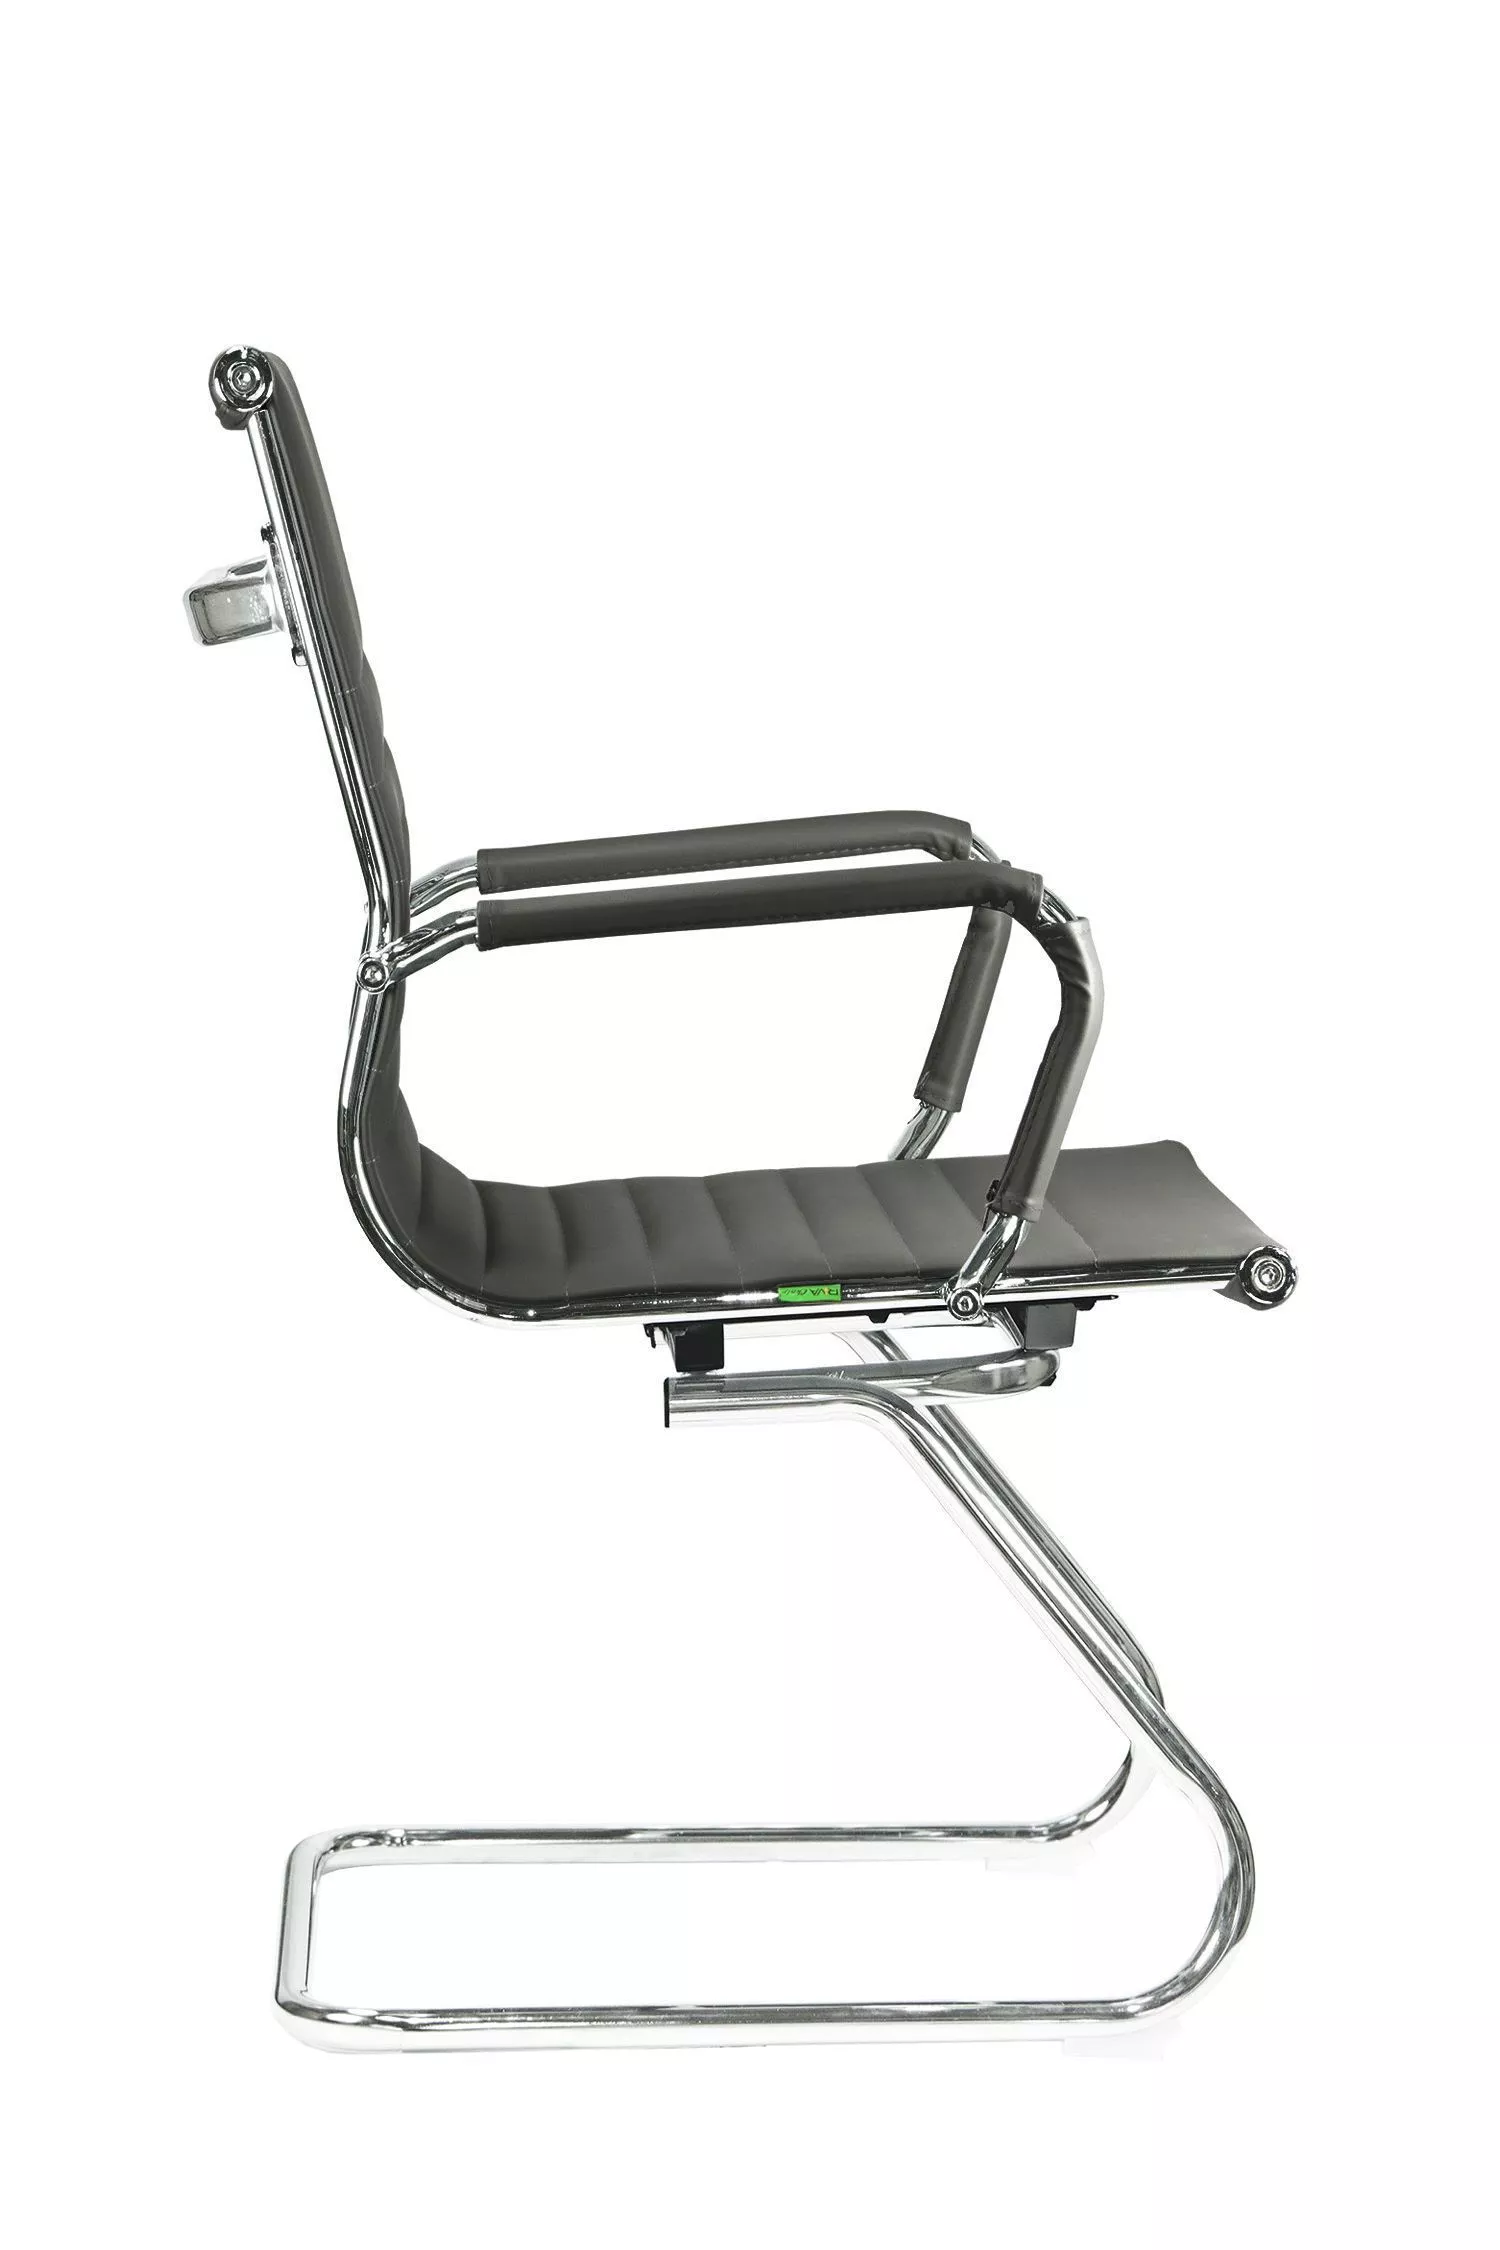 Конференц кресло Riva Chair Hugo 6002-3 серый